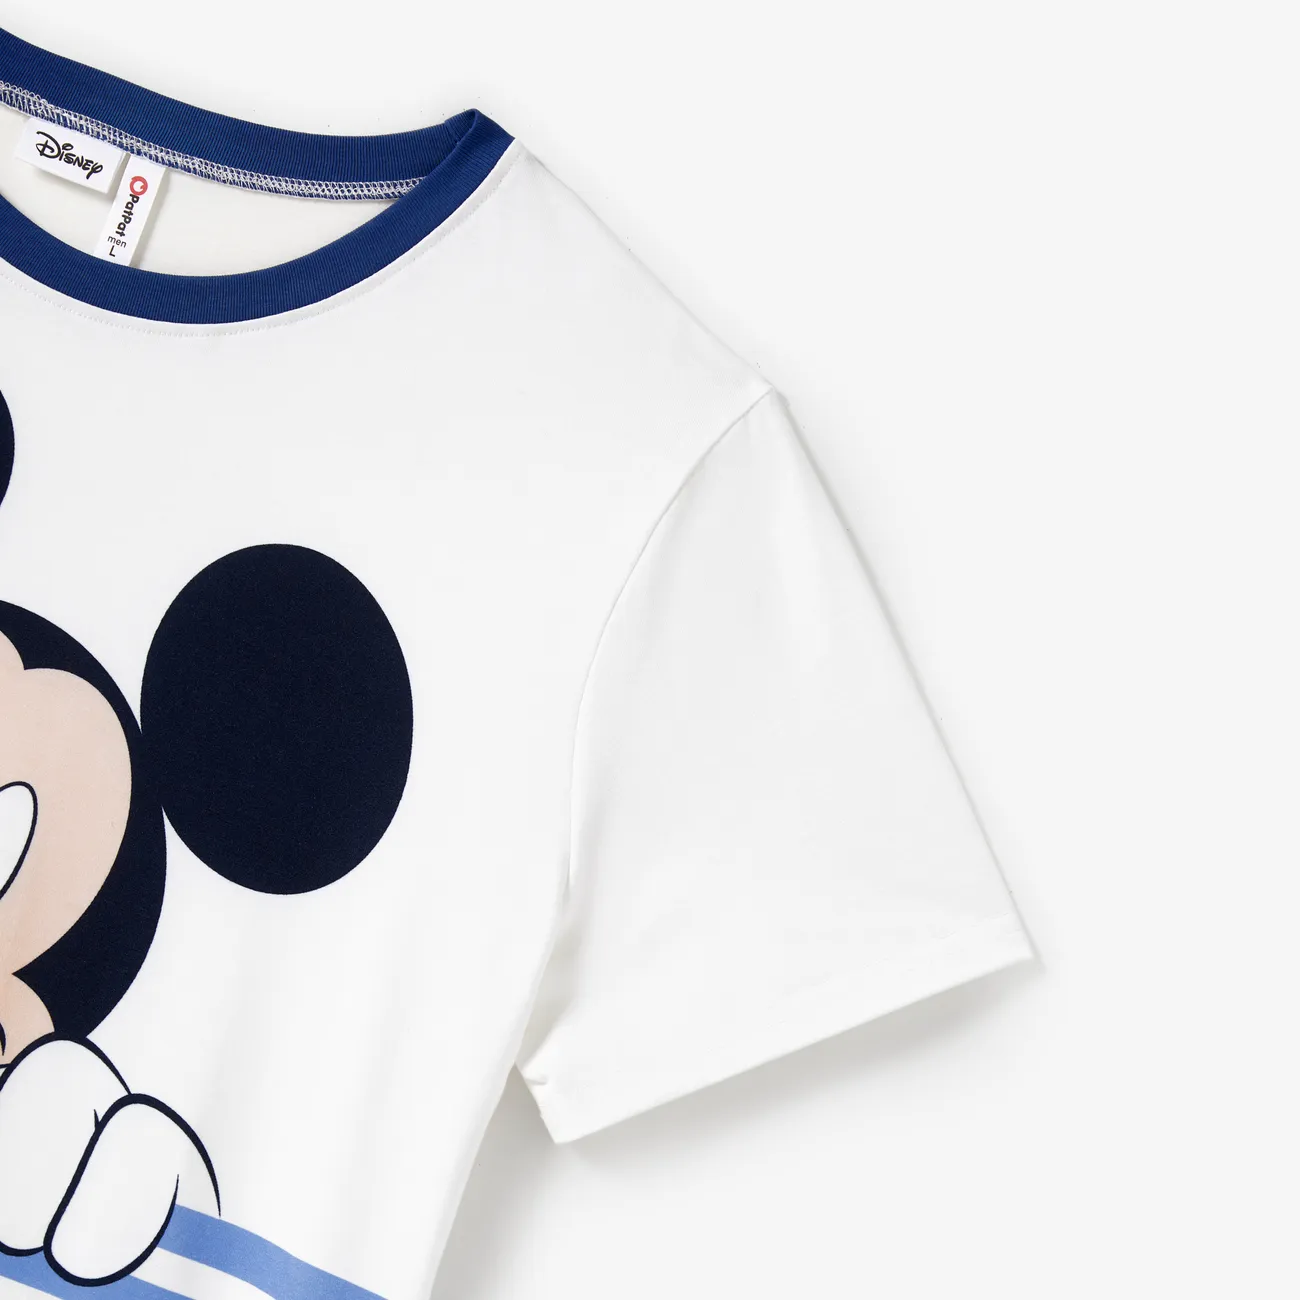 Disney Mickey and Friends Look de família Manga curta Conjuntos de roupa para a família Tops listras coloridas big image 1